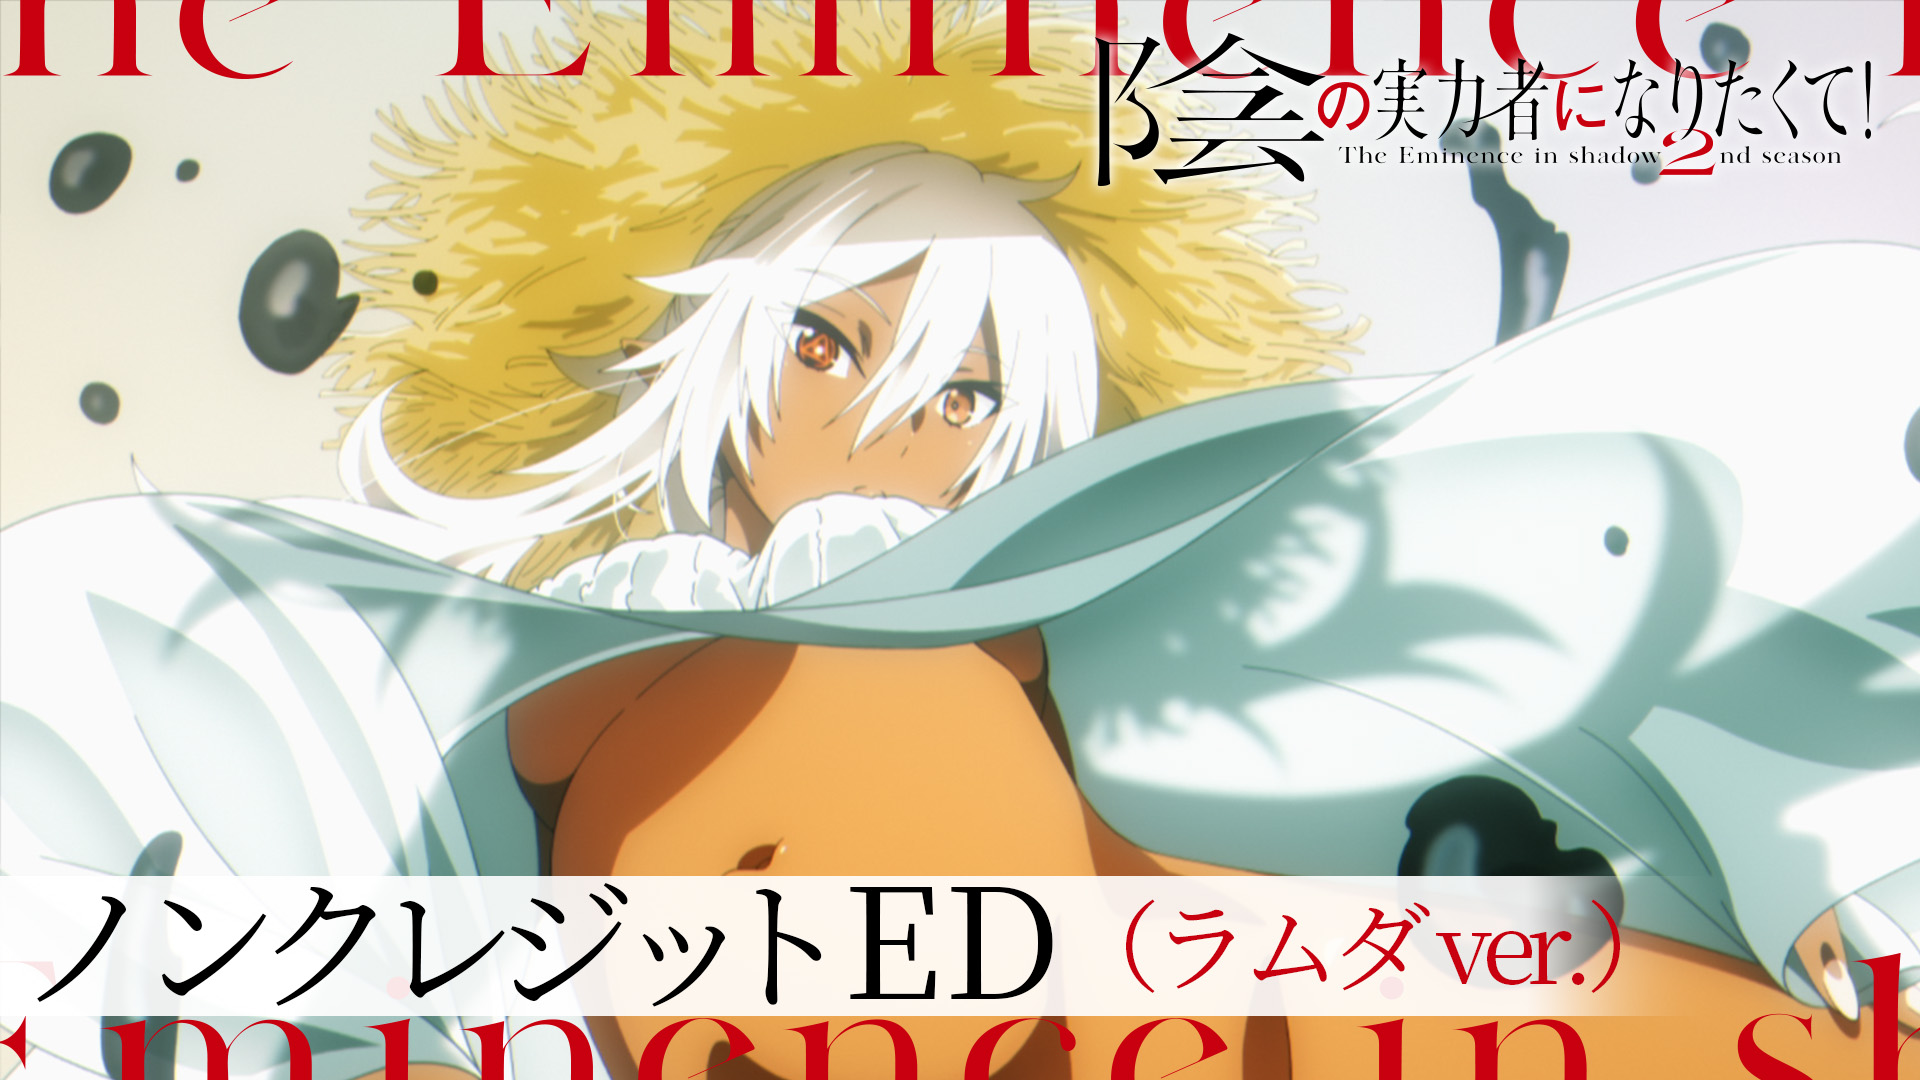 Anime-byme on X:  Eta  Kage no Jitsuryokusha ni Naritakute! 2nd Season  (The Eminence in Shadow Season 2) #陰の実力者 #shadowgarden #Anime #Animebyme   / X